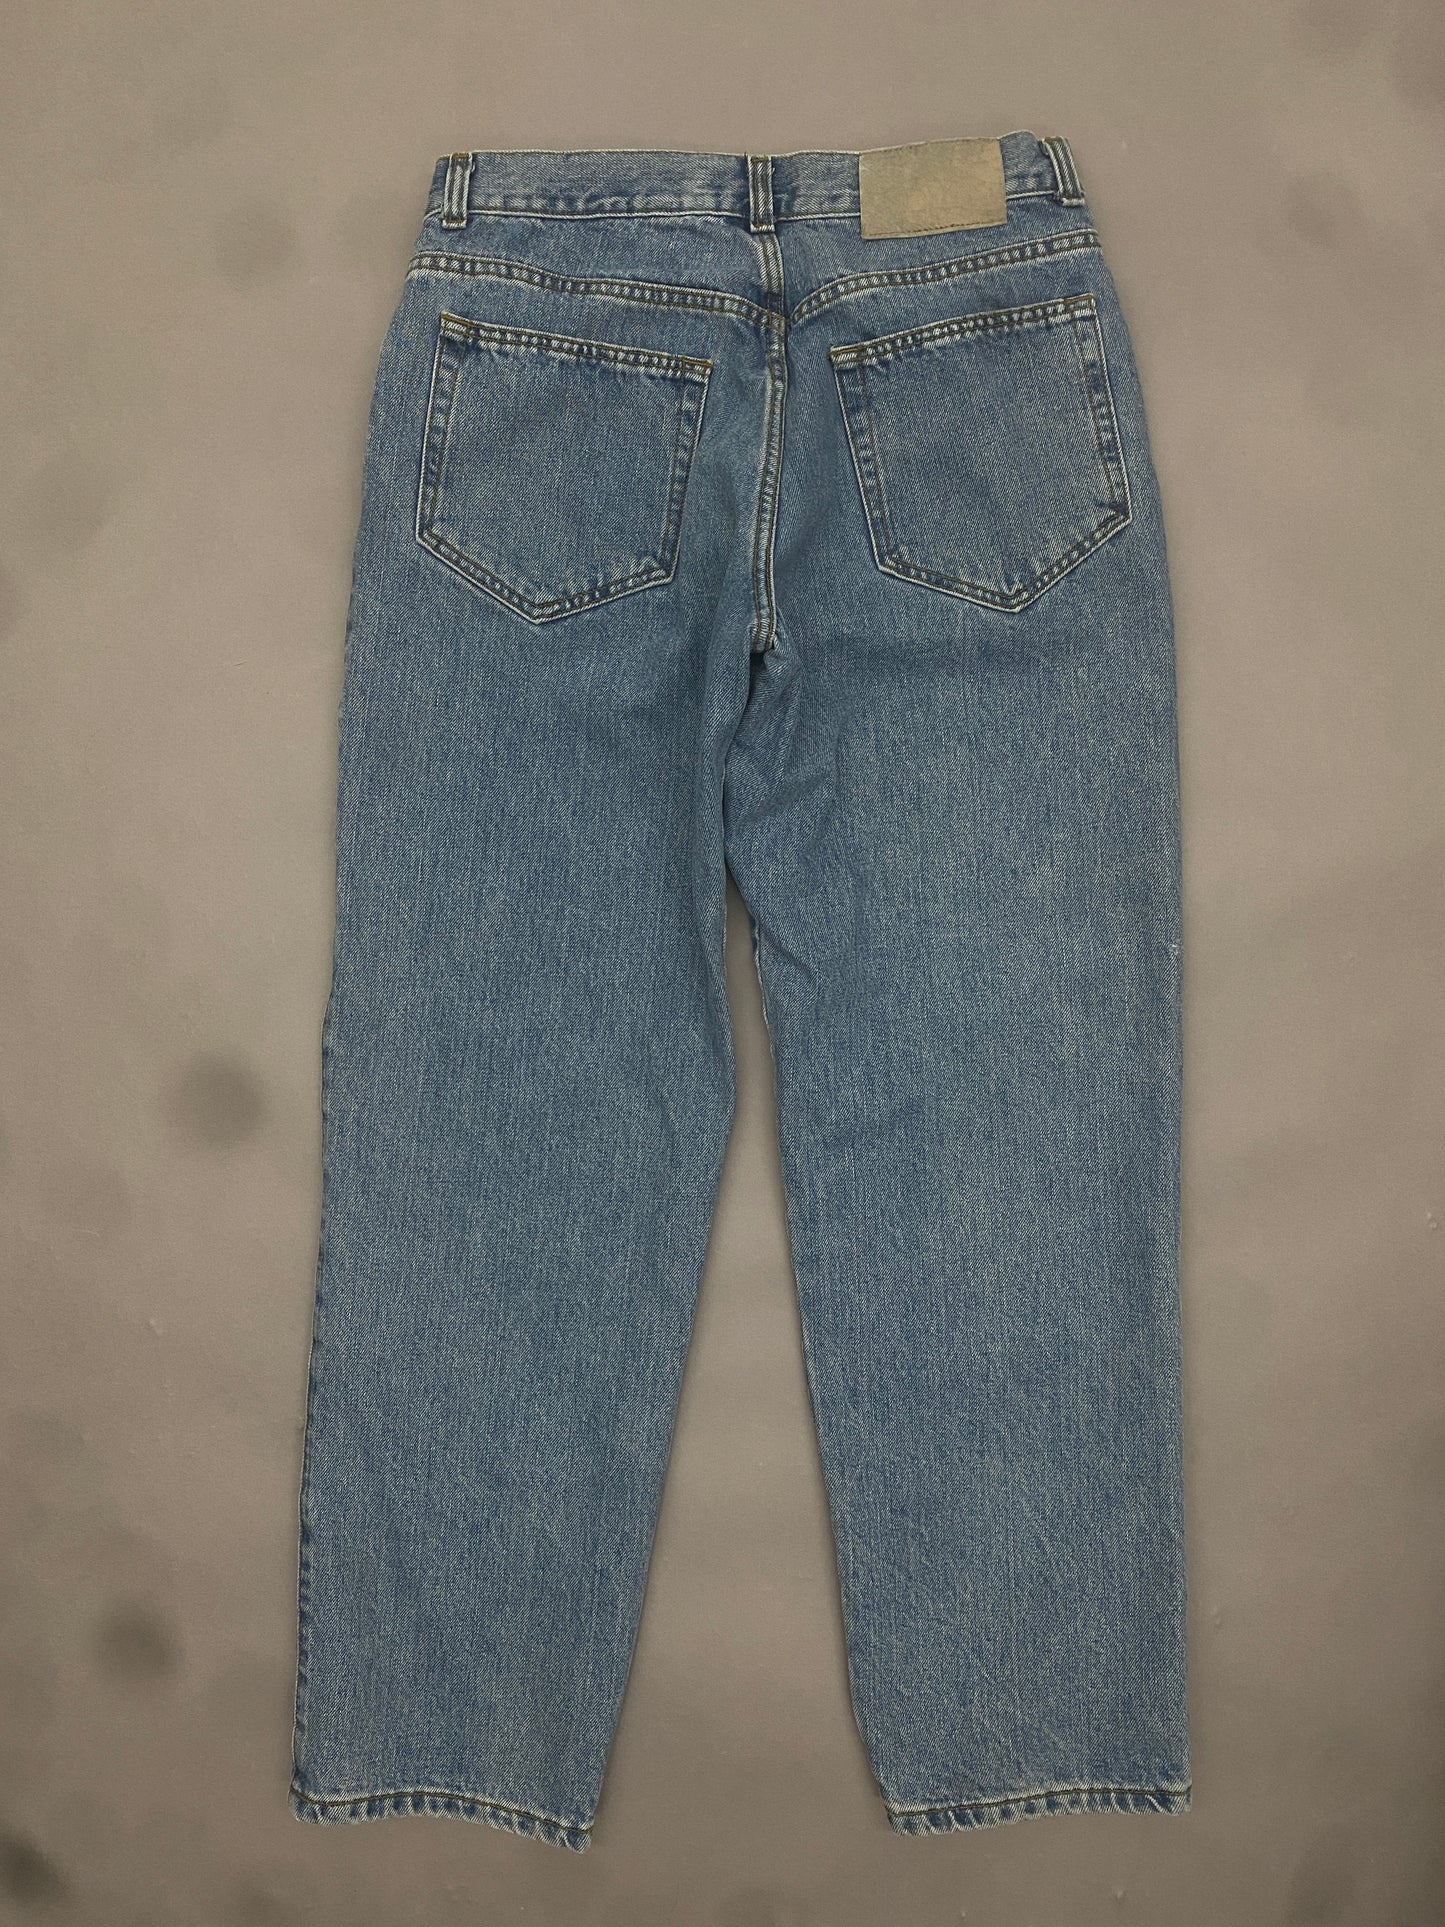 Marithe Francois Girbaud Vintage Jeans - 32 x 30